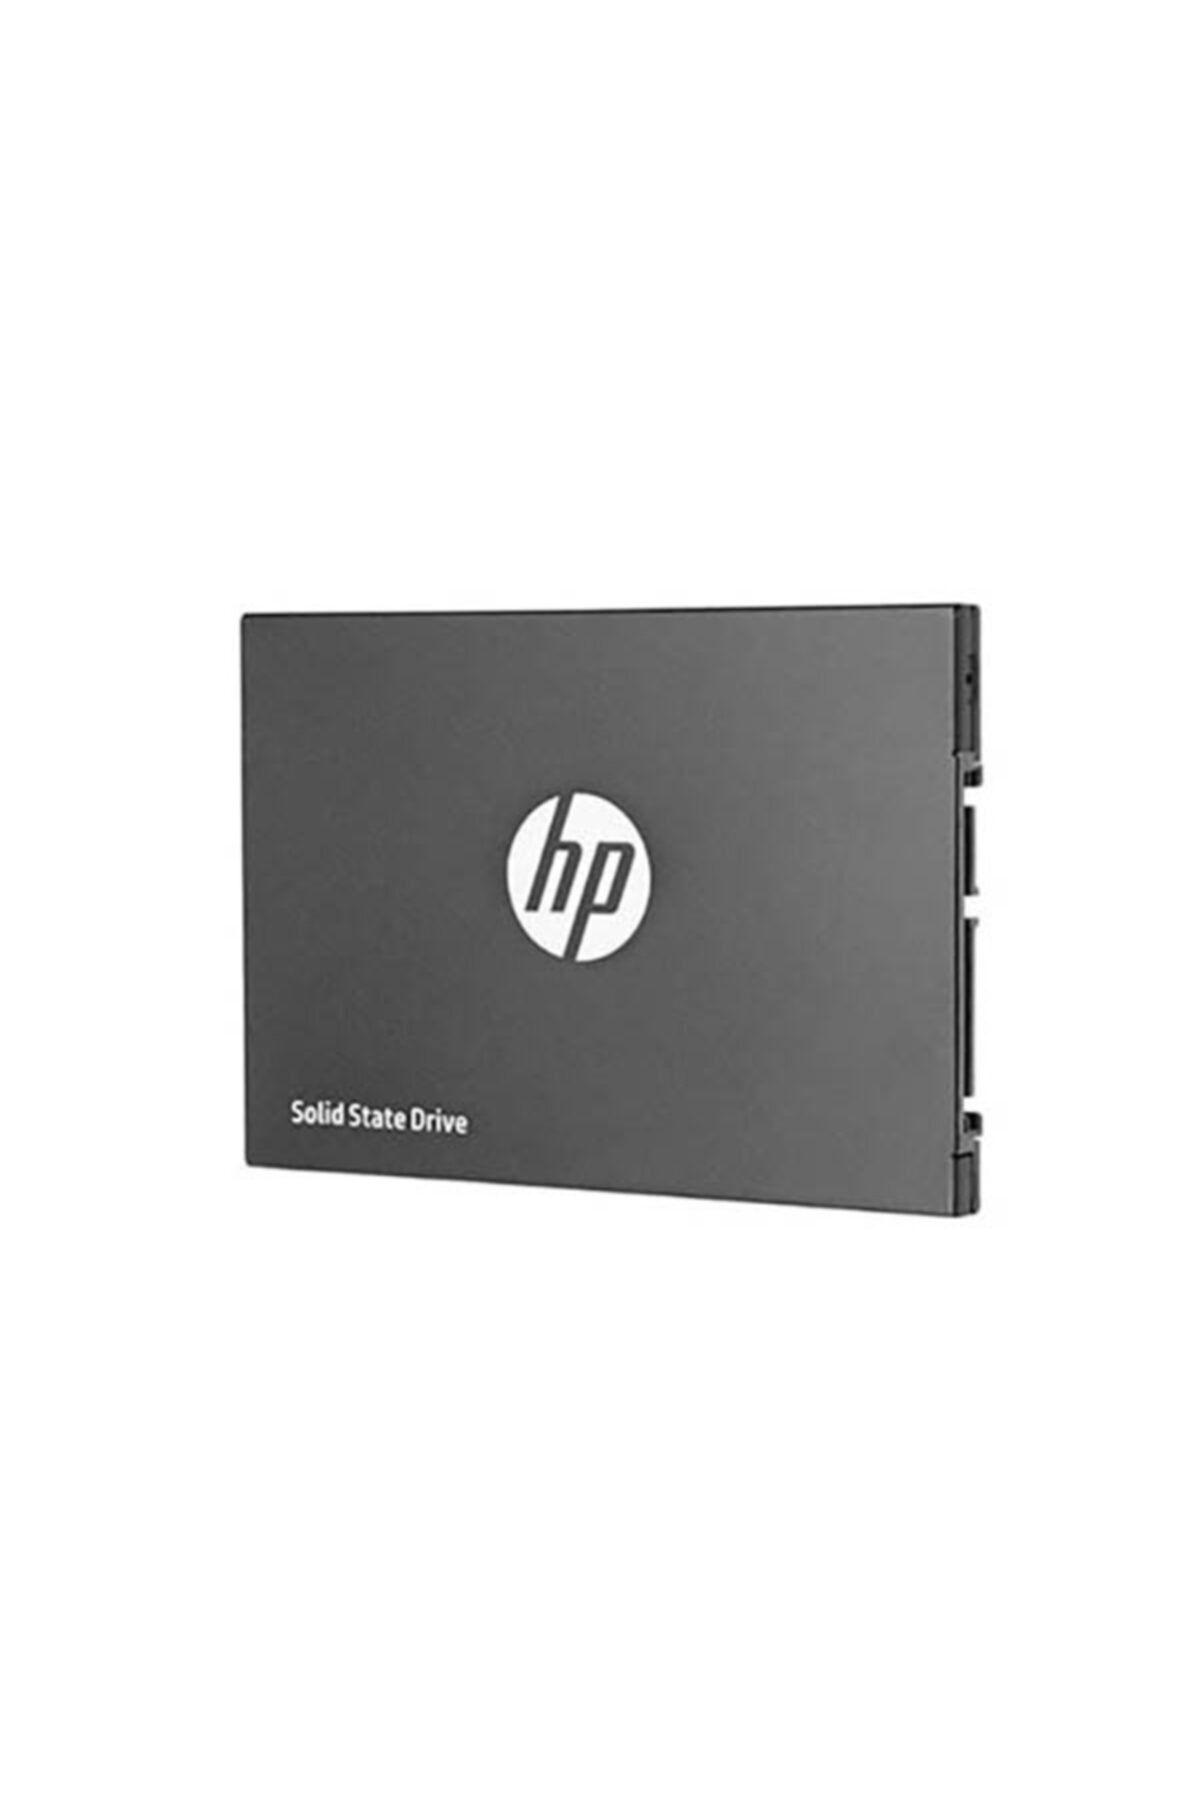 HP S700 250GB 555/515MB/s Sata 3 2.5" SSD 2DP98AA